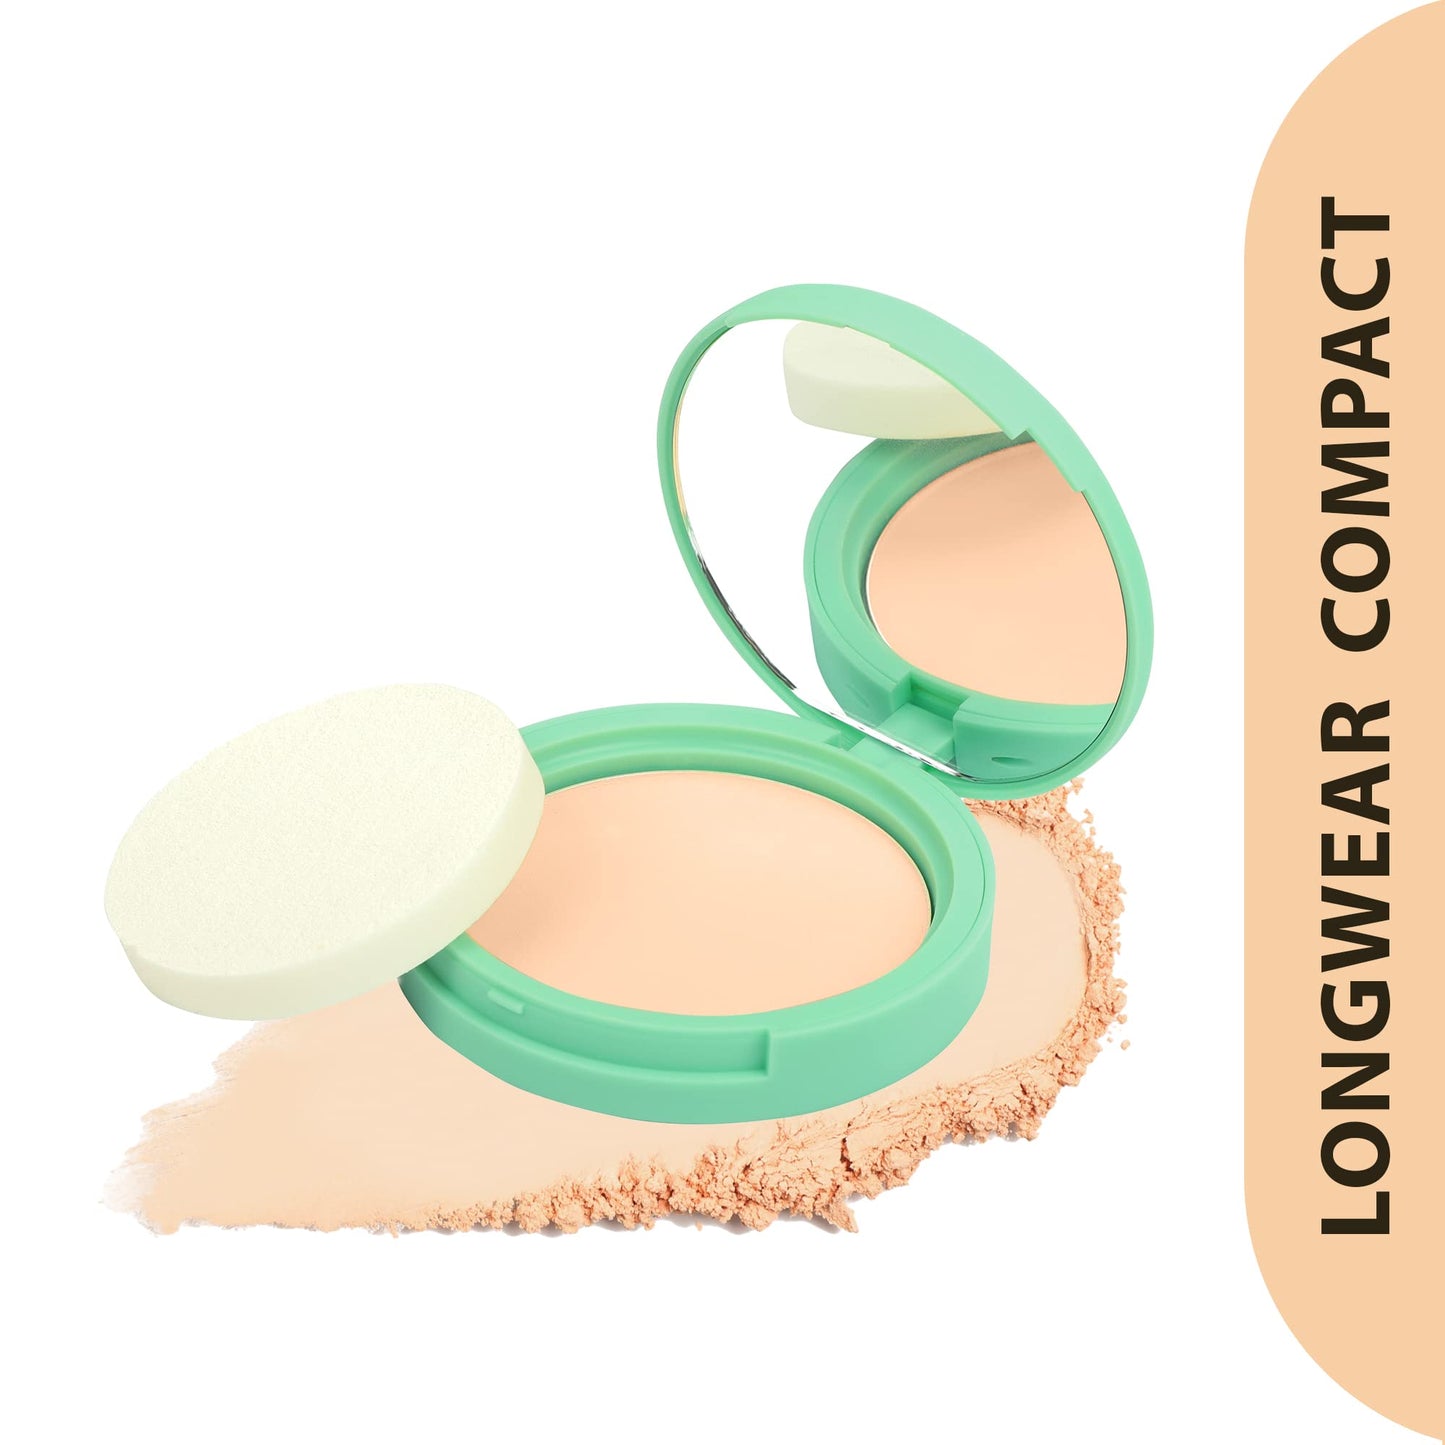 SUGAR POP Longwear Compact – 01 Sand for Fair to Medium Skin Tone | Vitamin E Enriched | UV Protection, Pore Minimizing l Medium Coverage | Face Compact for Women l 9 gm